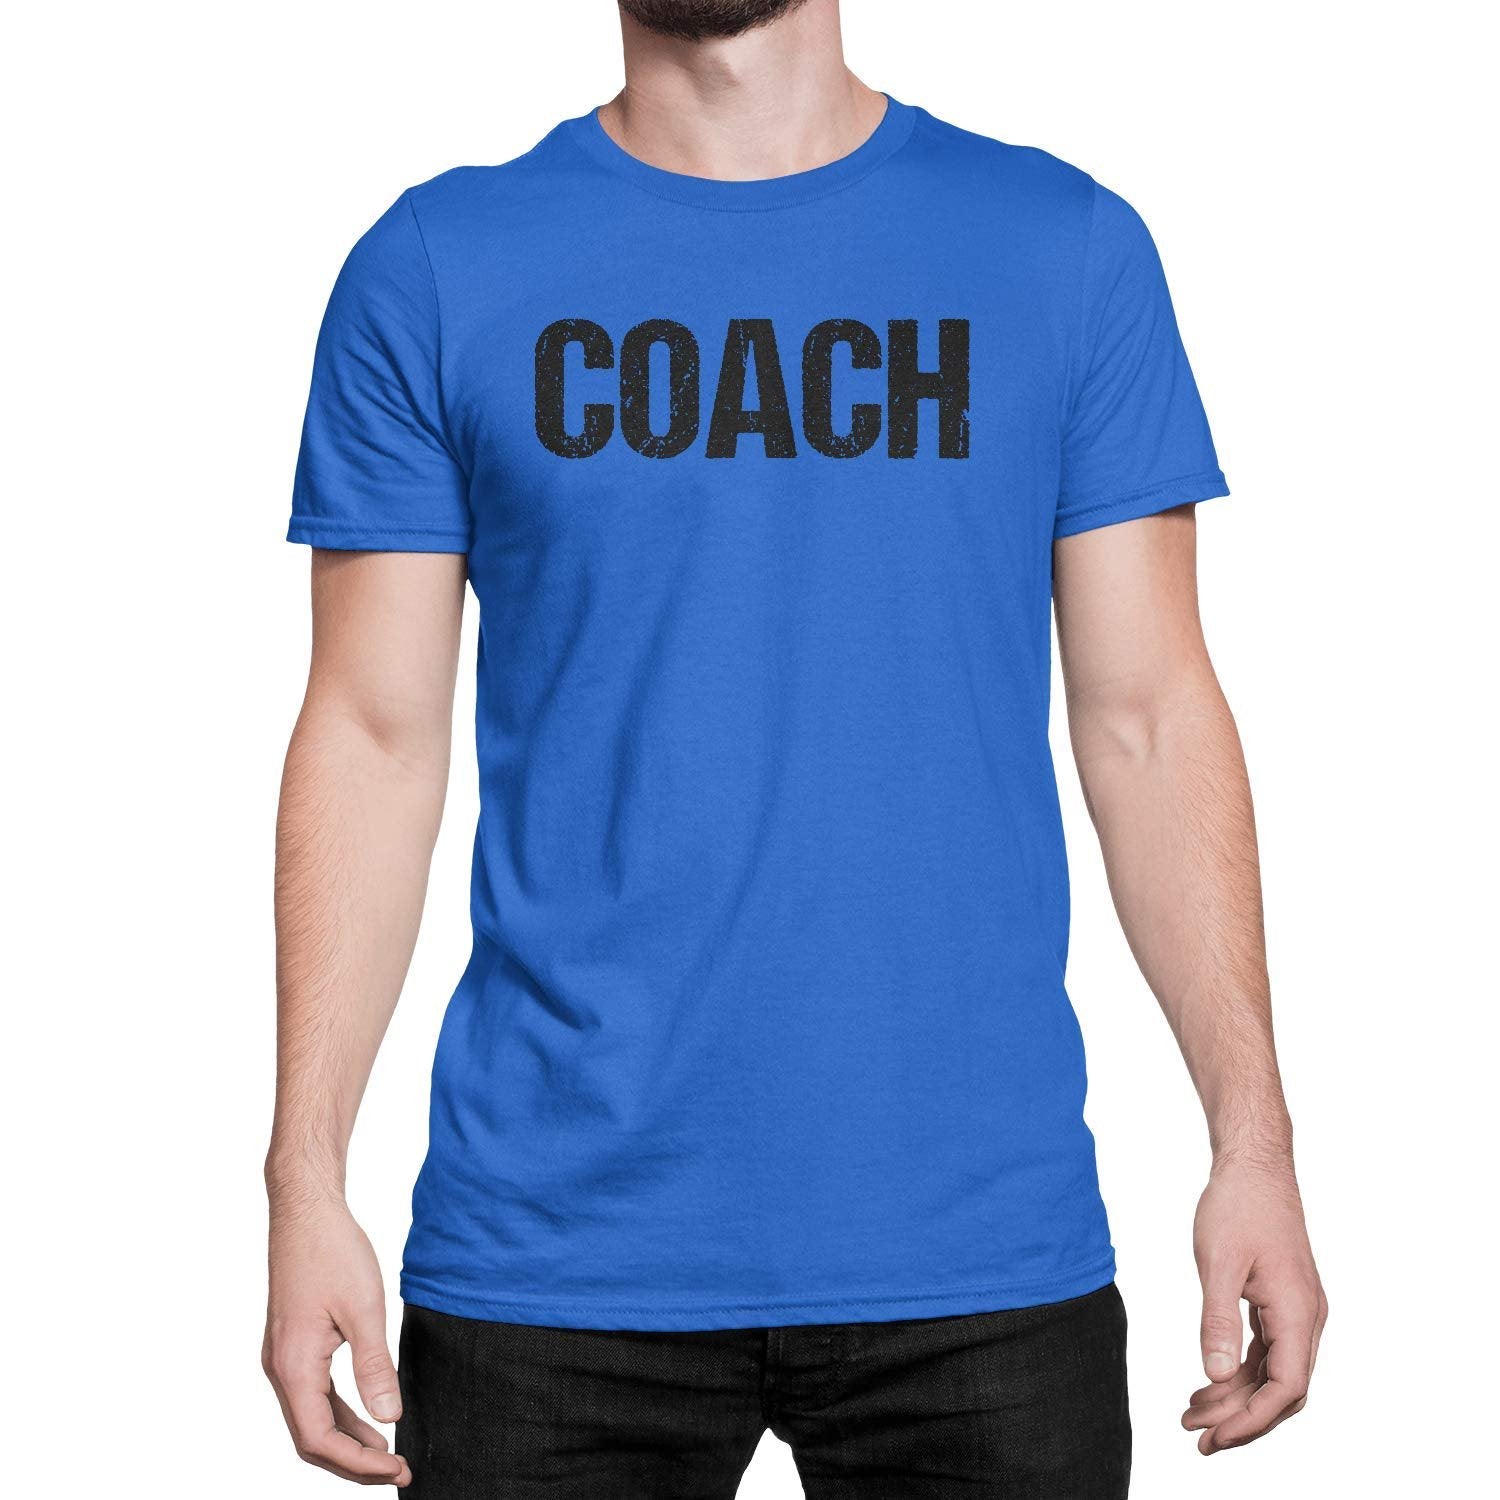 Coach T-Shirt Sports Coaching Tee Shirt (Royal & Black, Distressed)